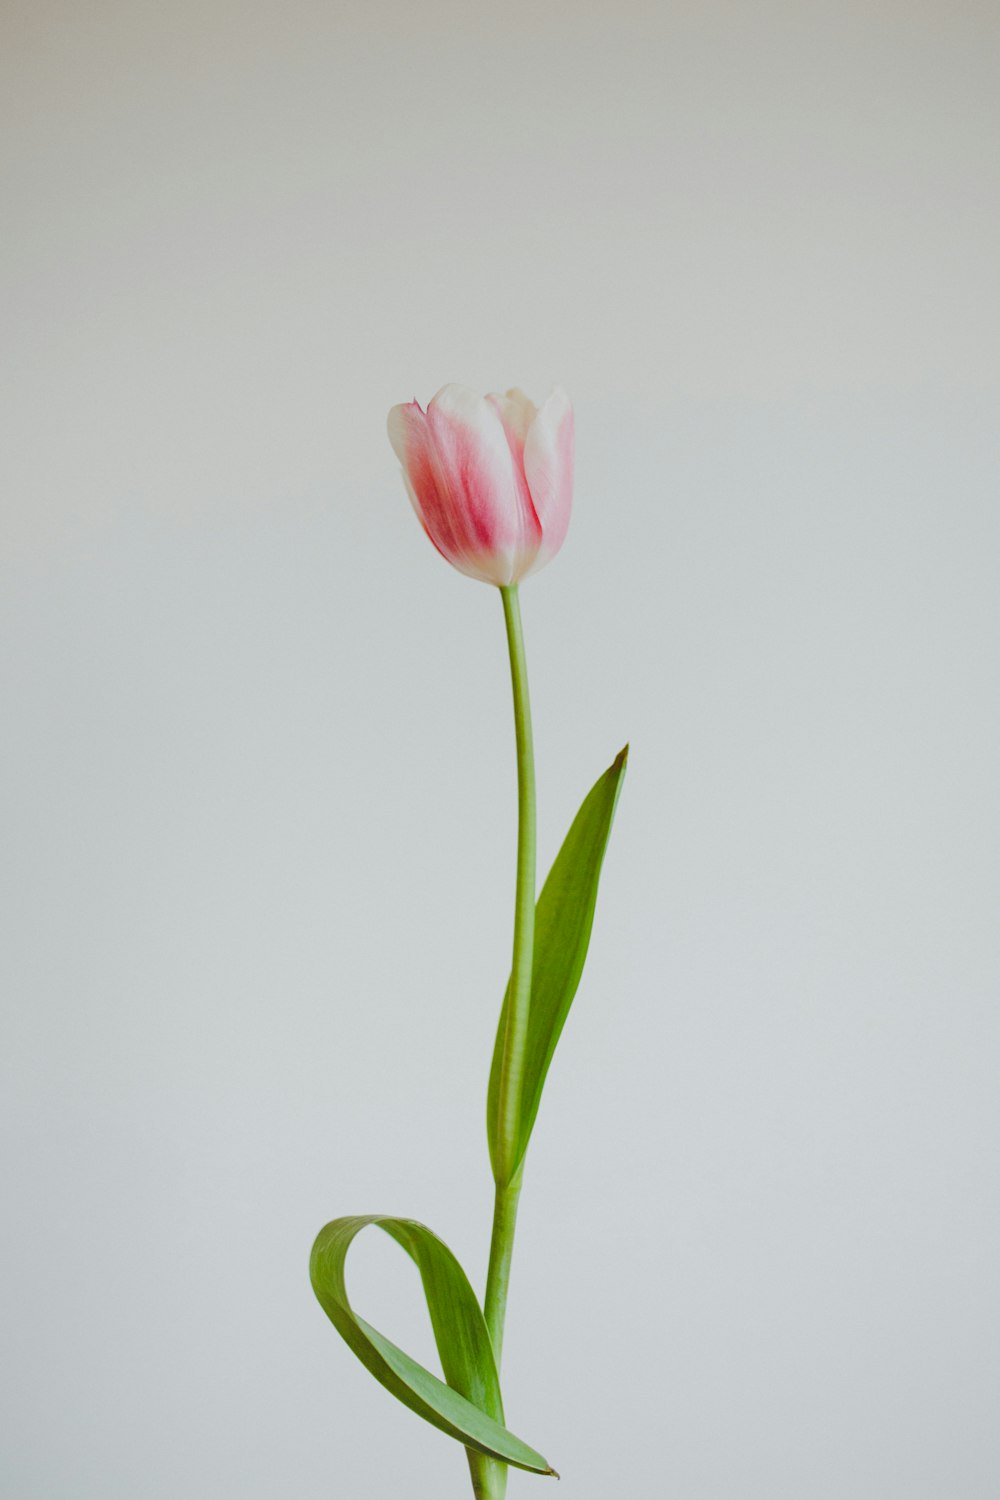 tulipe rose en fleur photo en gros plan